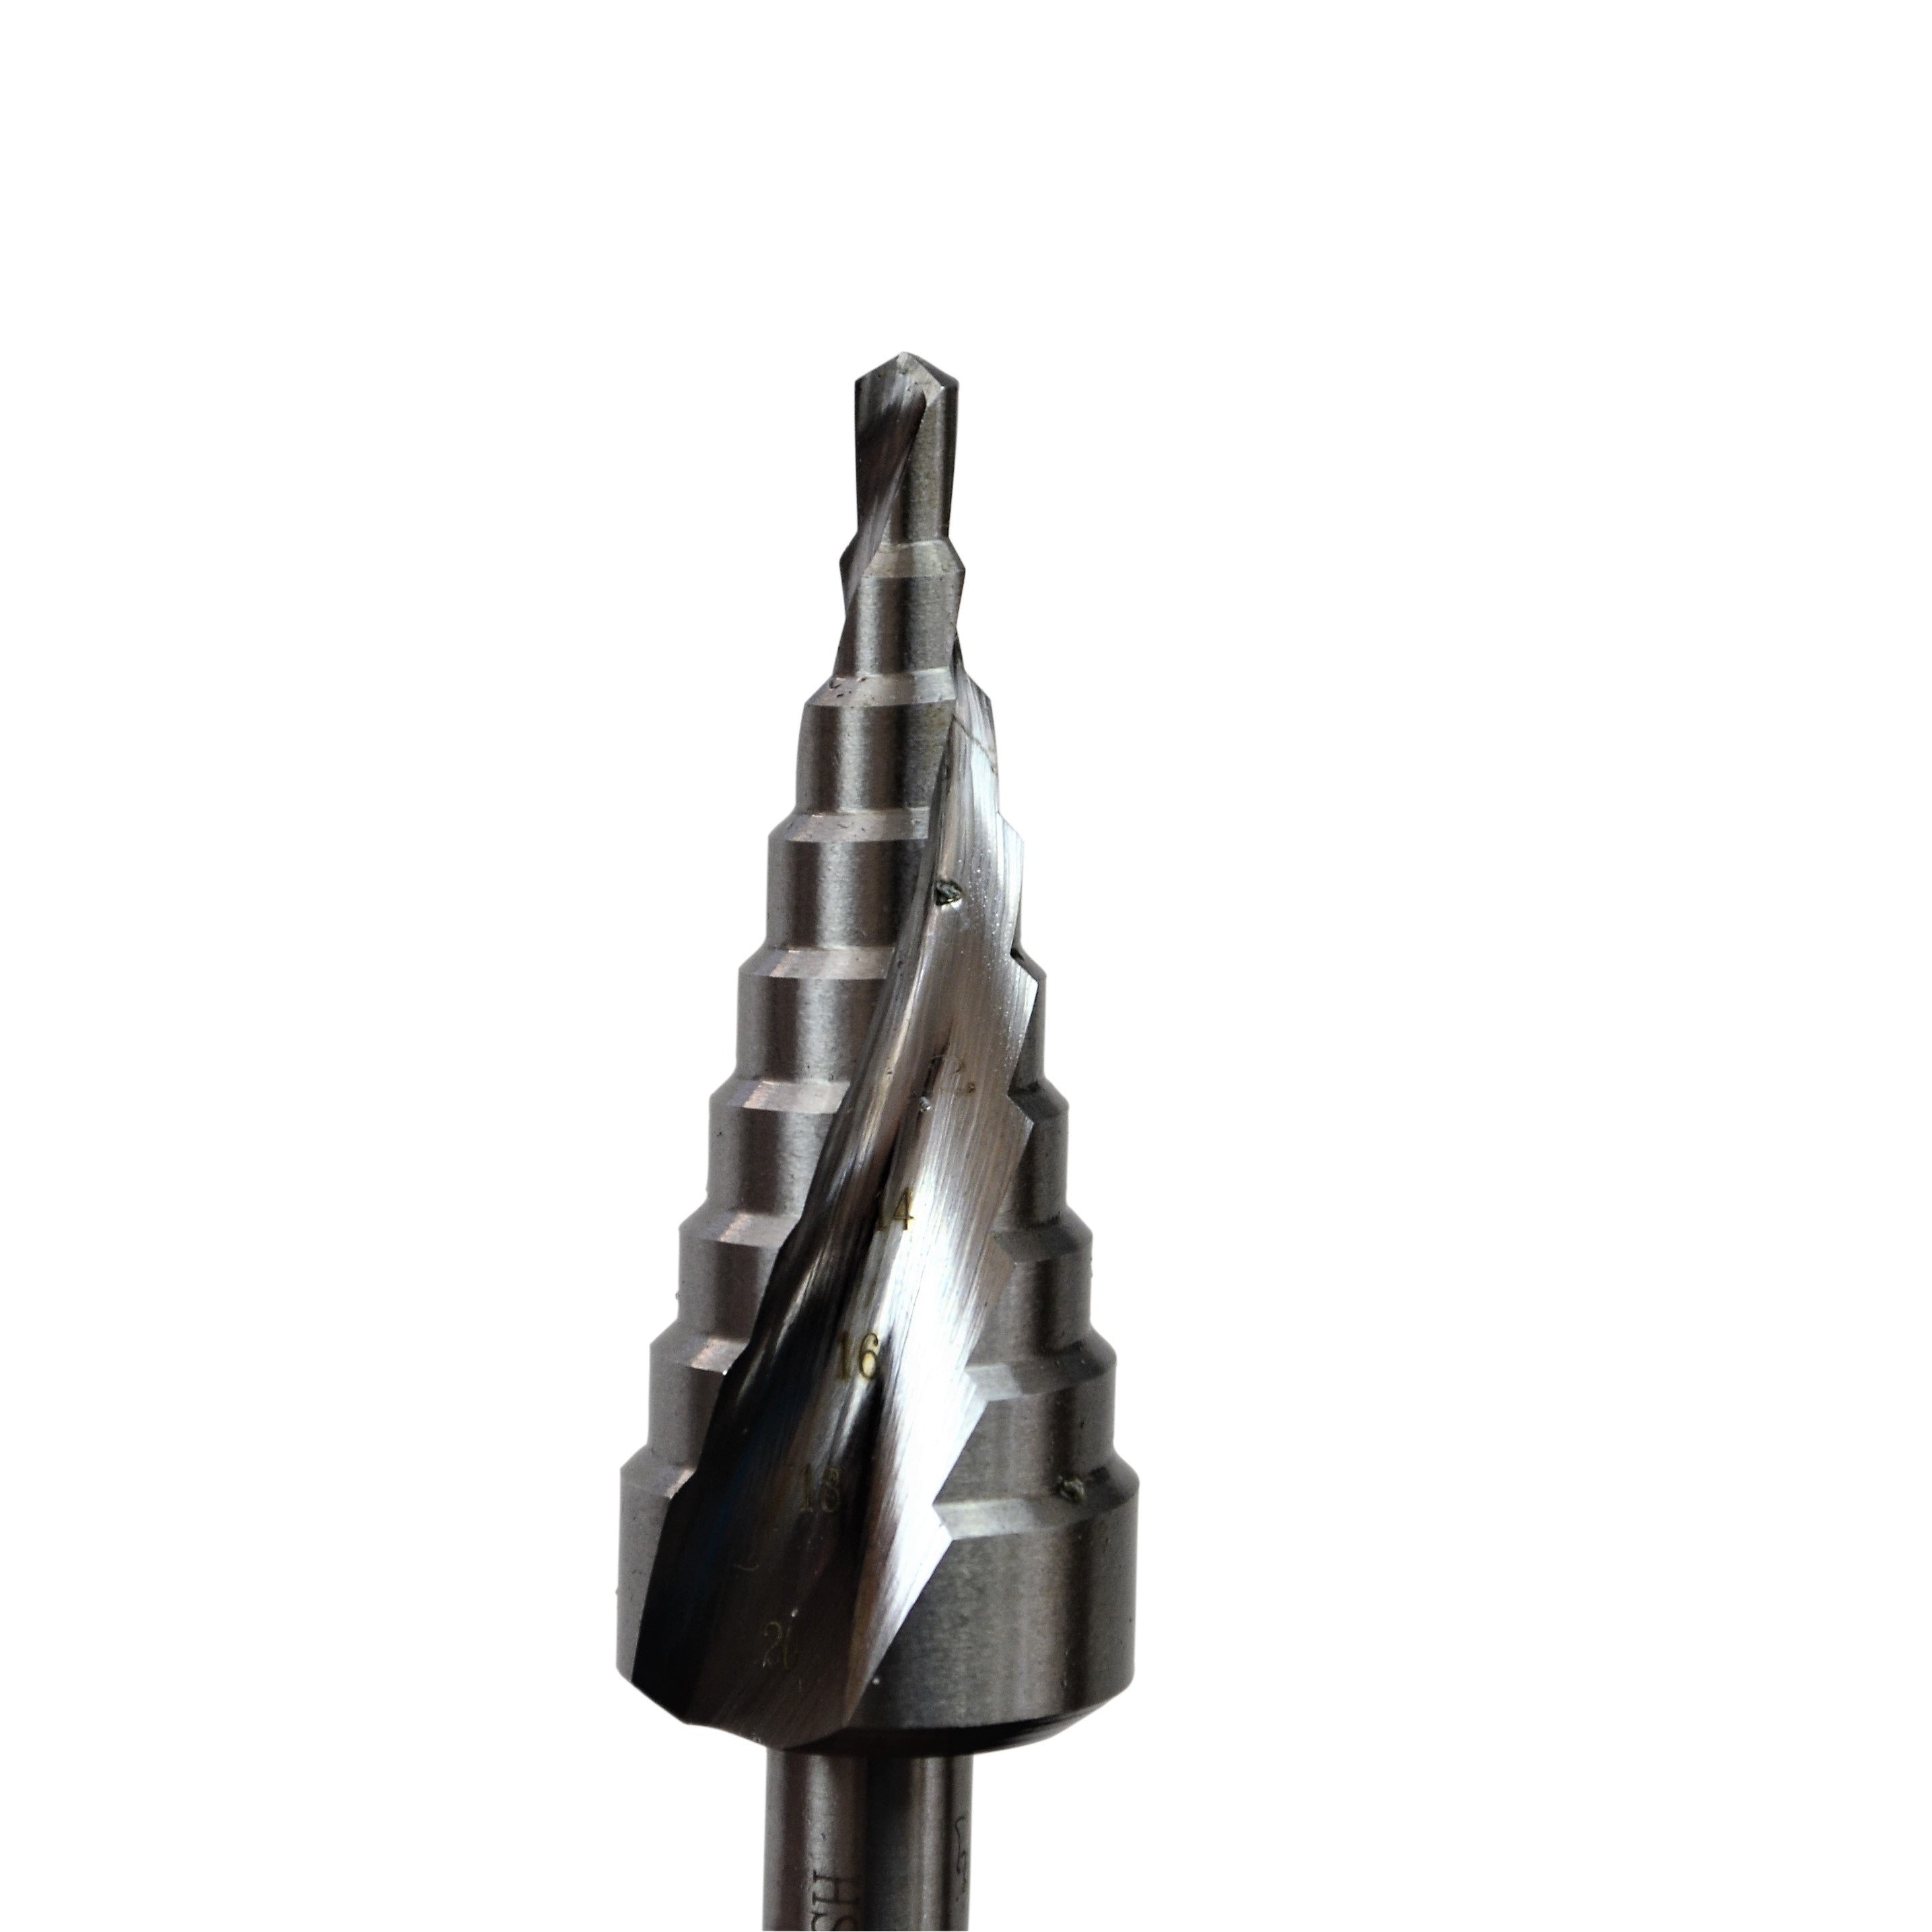 HSS M2 Spiral Flute 3pcs/set Step Drills Flare Drill Set 4-30mm faster cooling high speed workshop